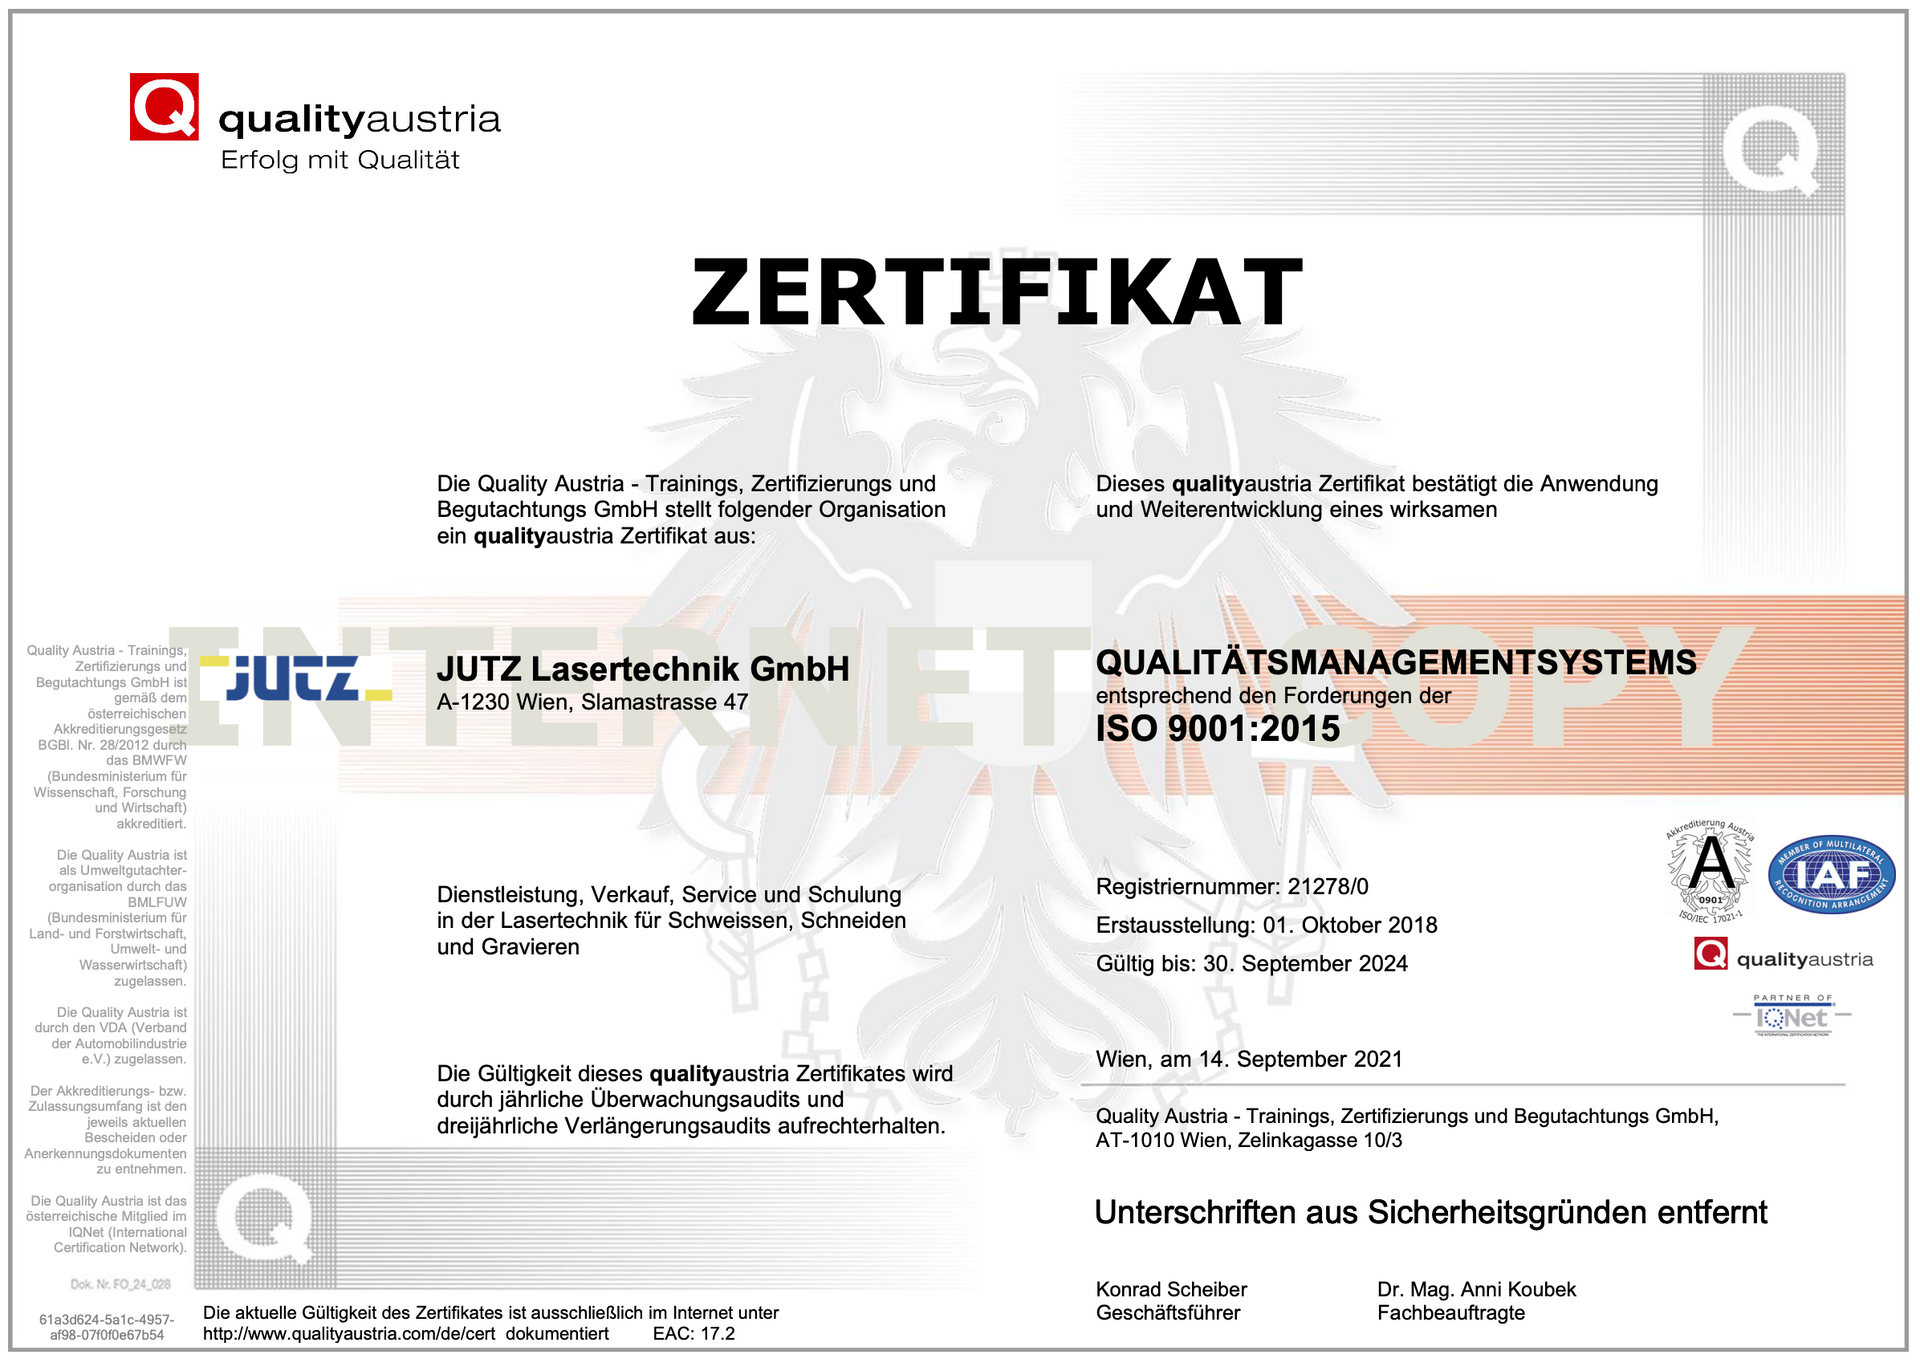 Jutz Lasertechnik, Zertifikat